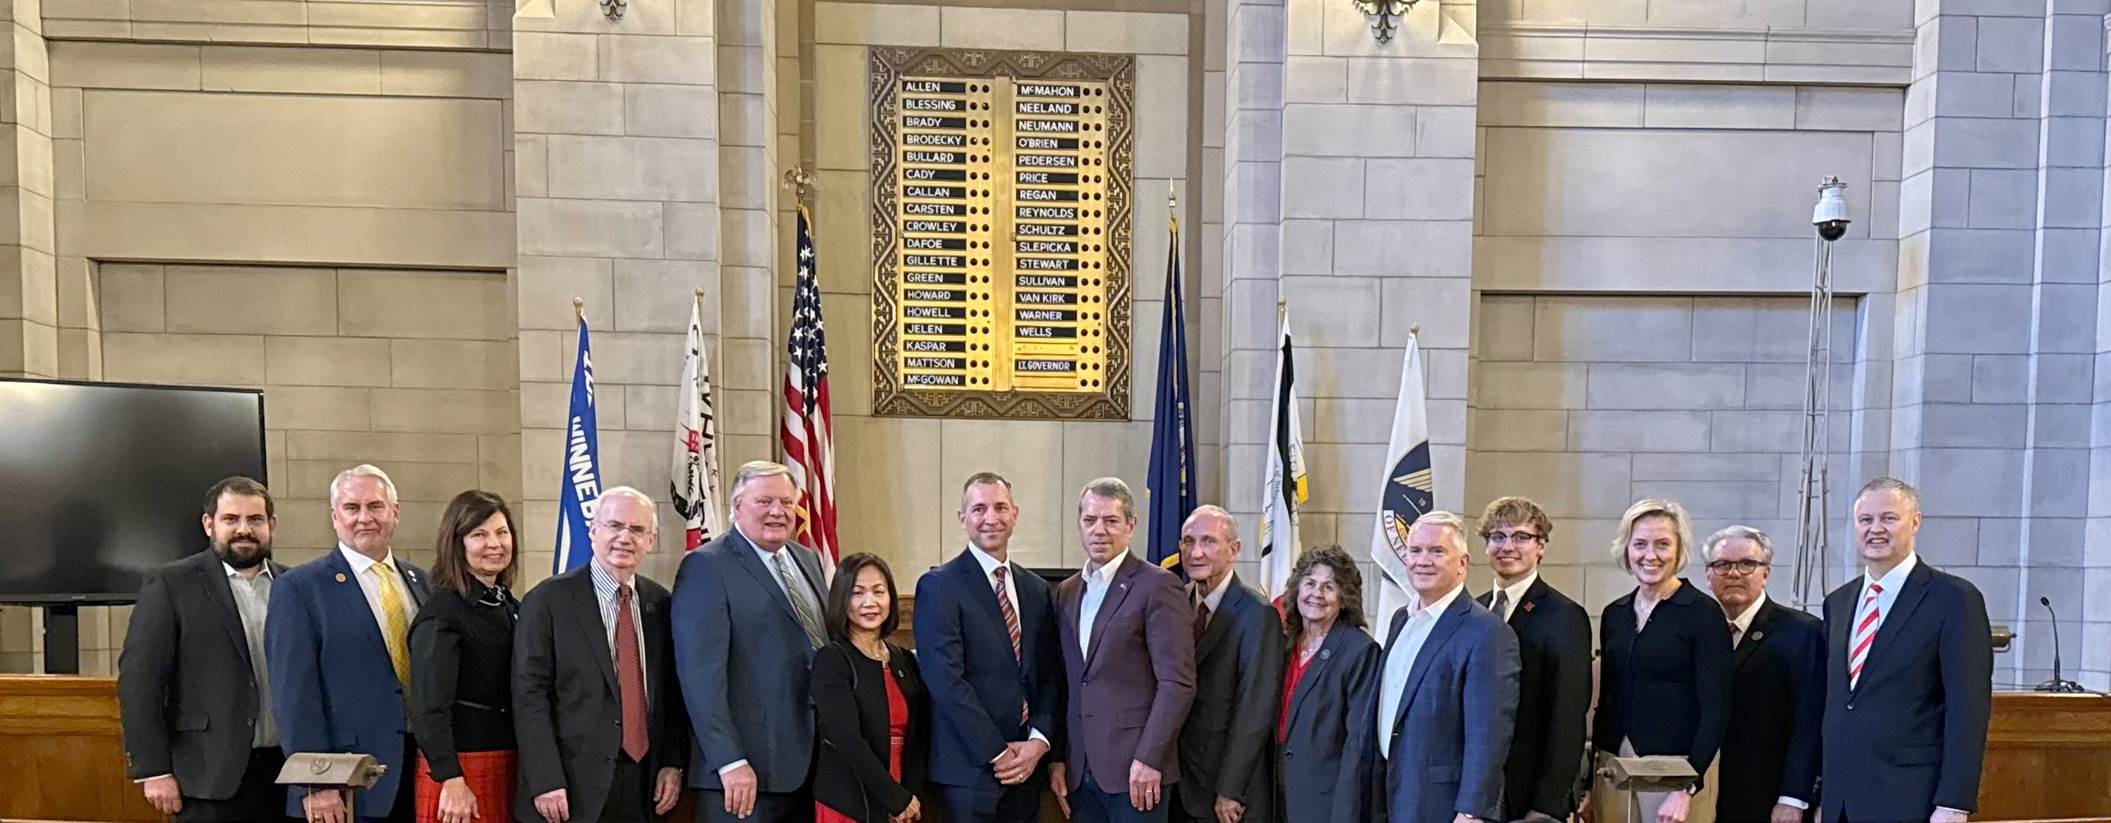 University of Nebraska (NU) System leaders, Board of Regents members, and others join Nebraska Governor Jim Pillen.